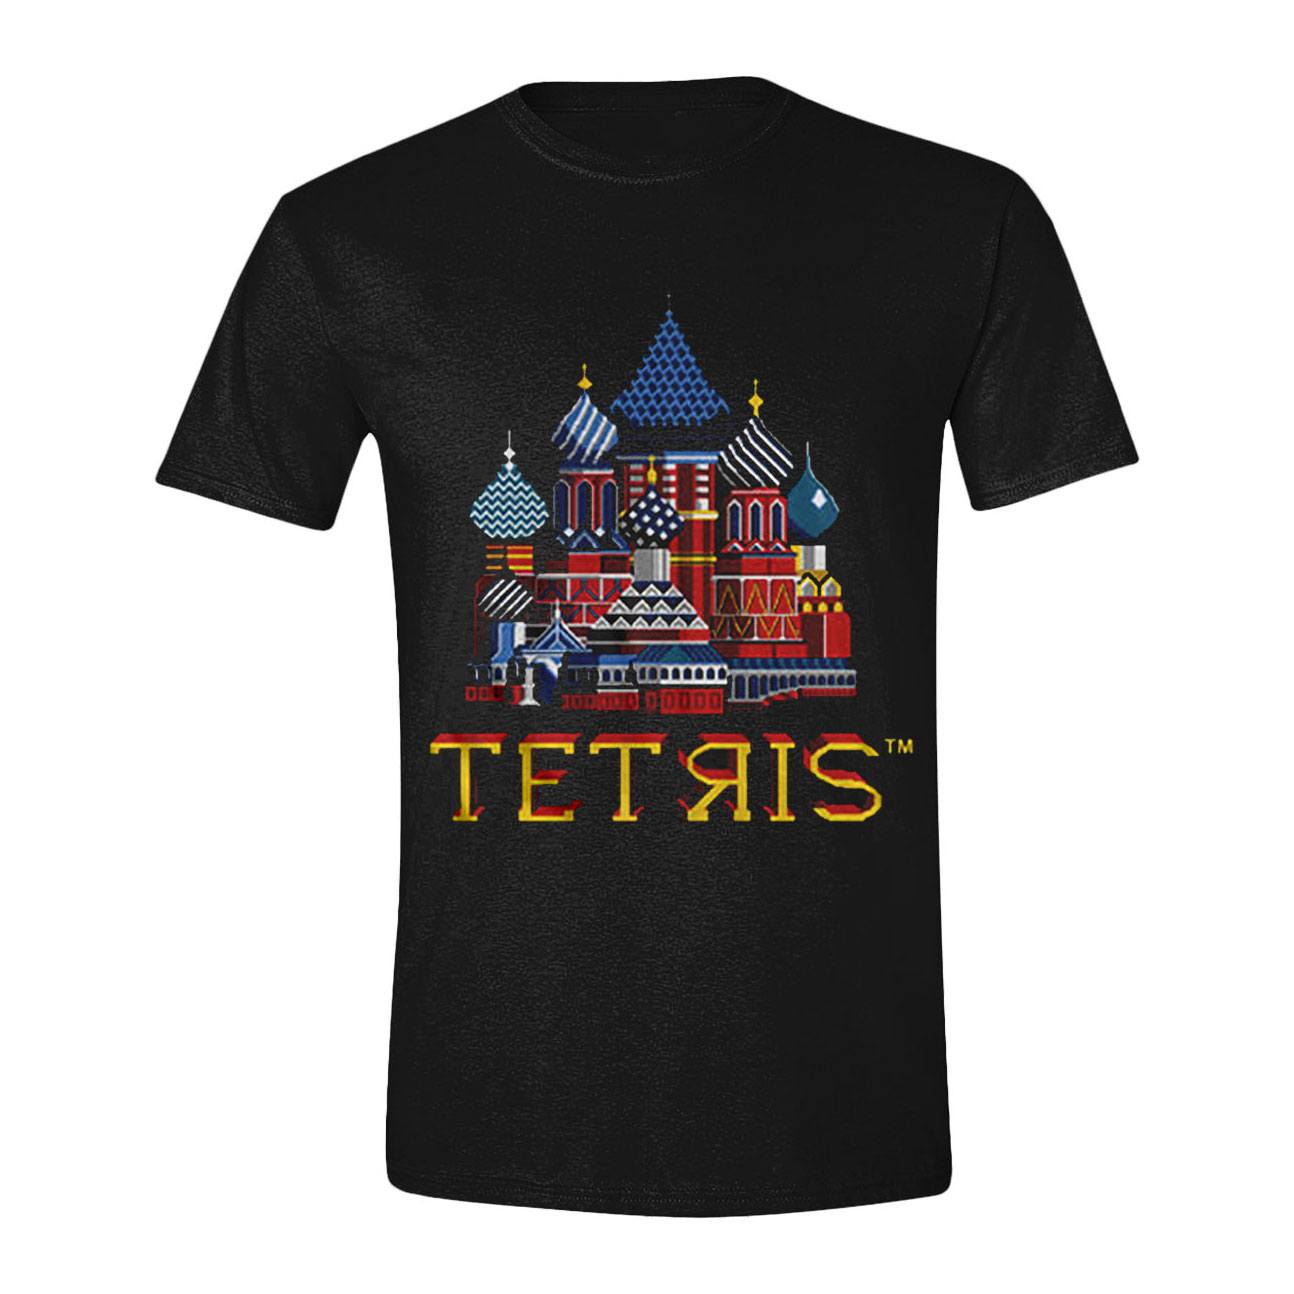 Tetris T-Shirt Red Square (M)